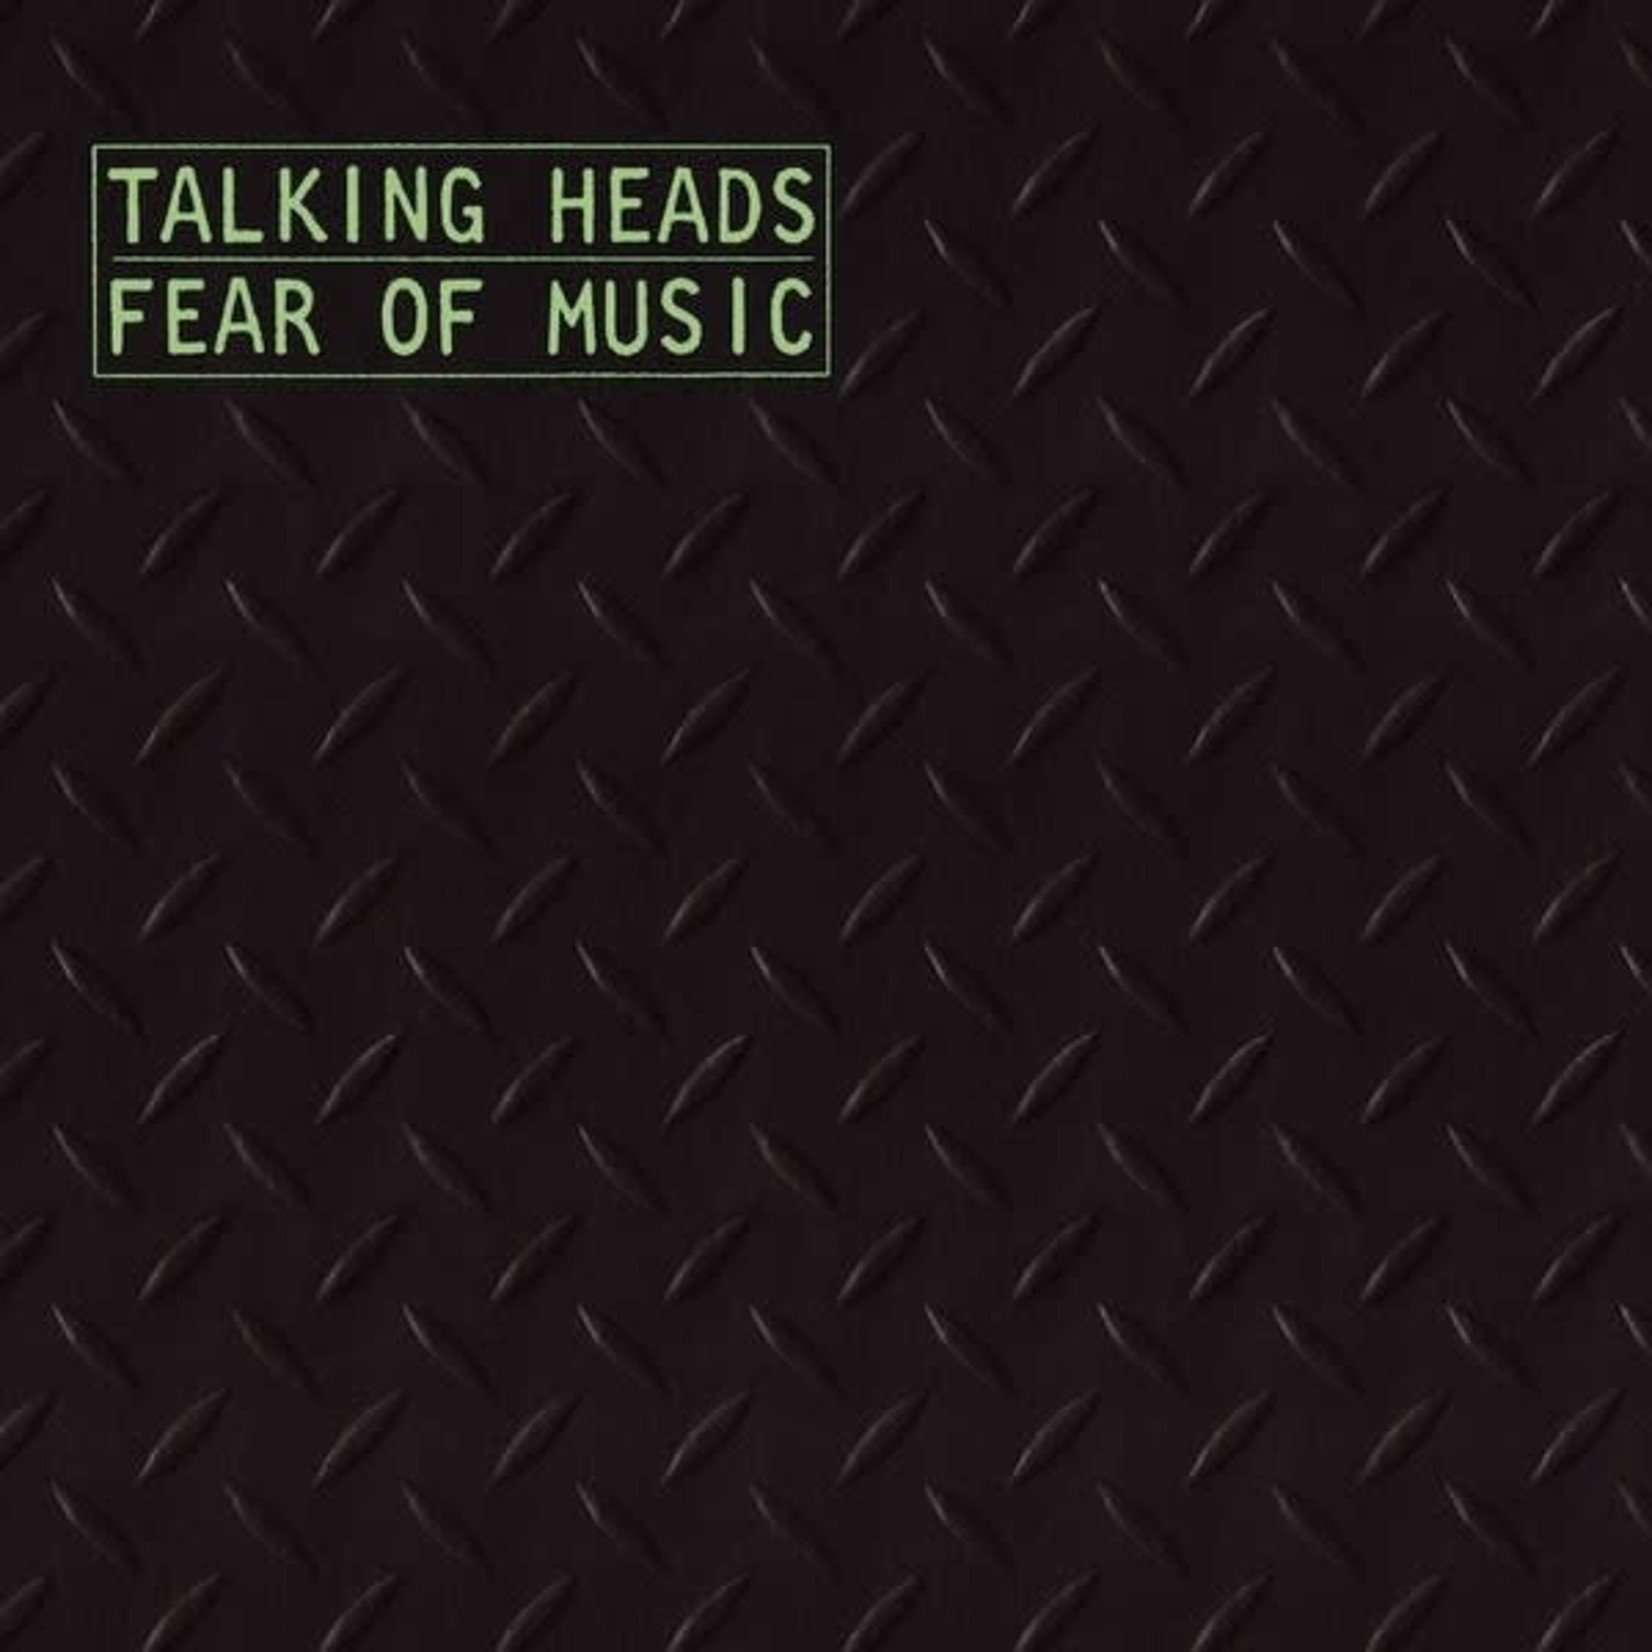 [New] Talking Heads - Fear Of Music (Rocktober 2020, silver vinyl)